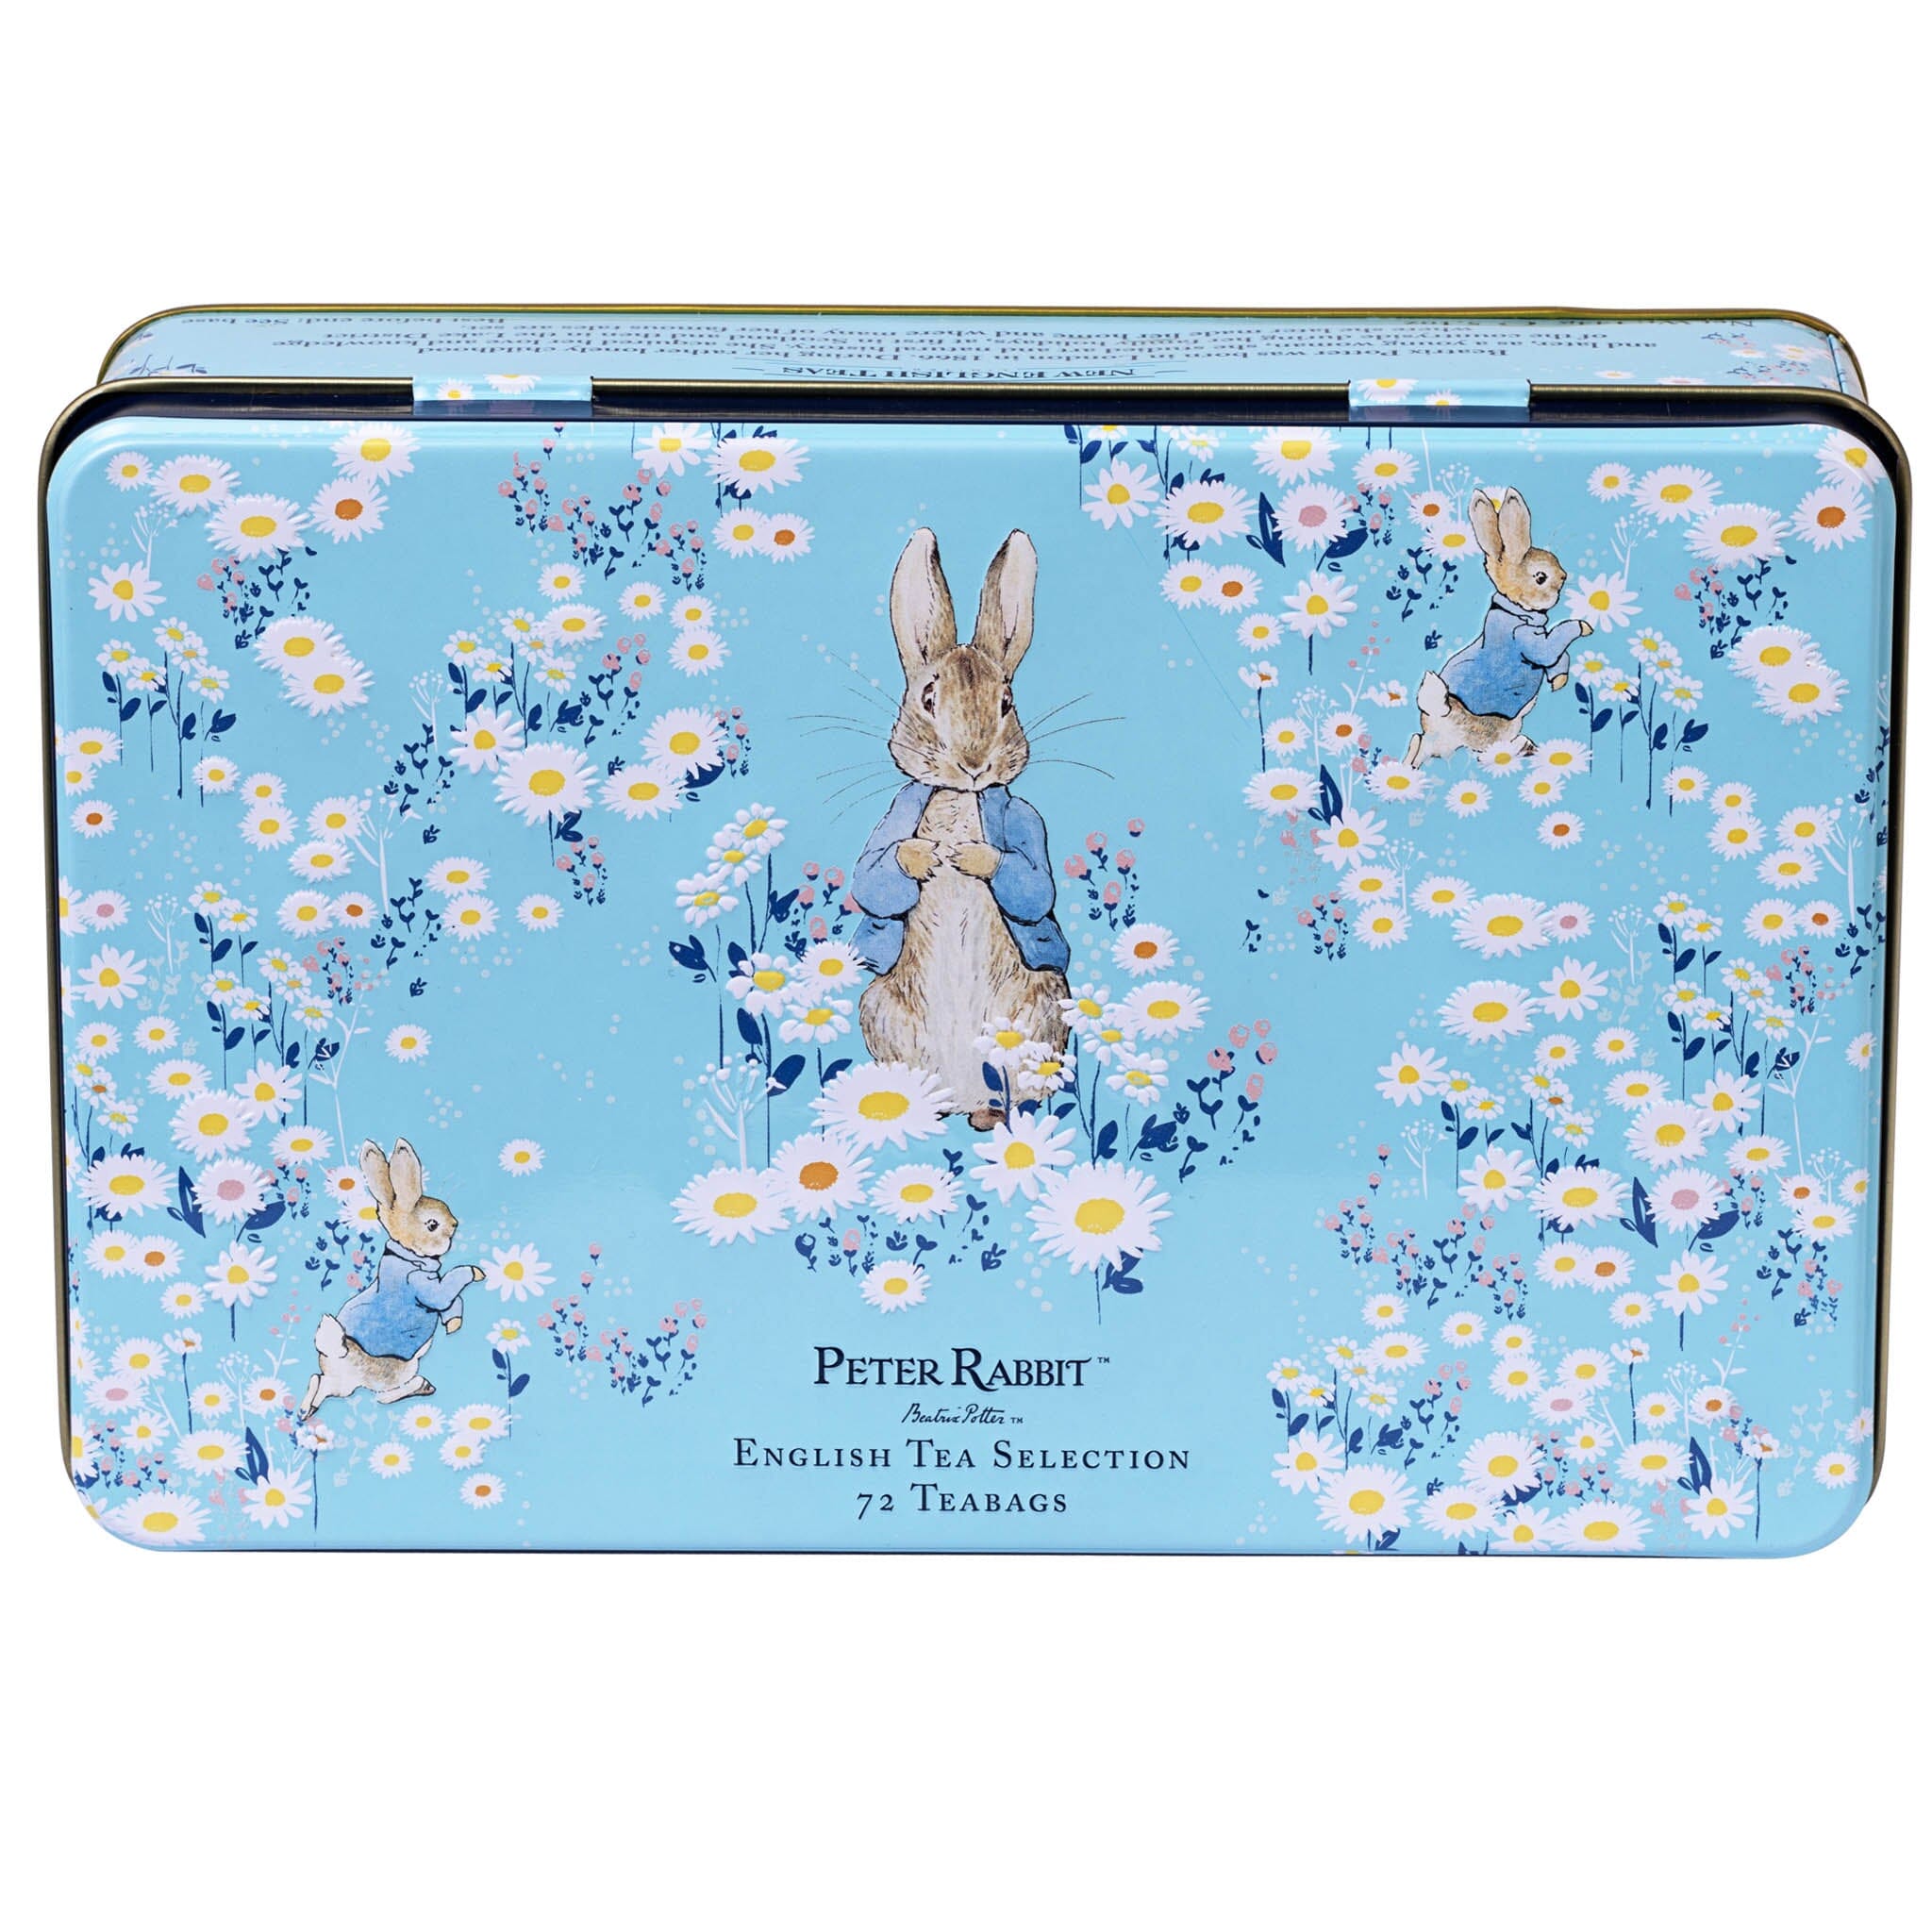 Peter Rabbit Daisies Tea Selection Tin with 72 Teabags Tea Tins New English Teas 